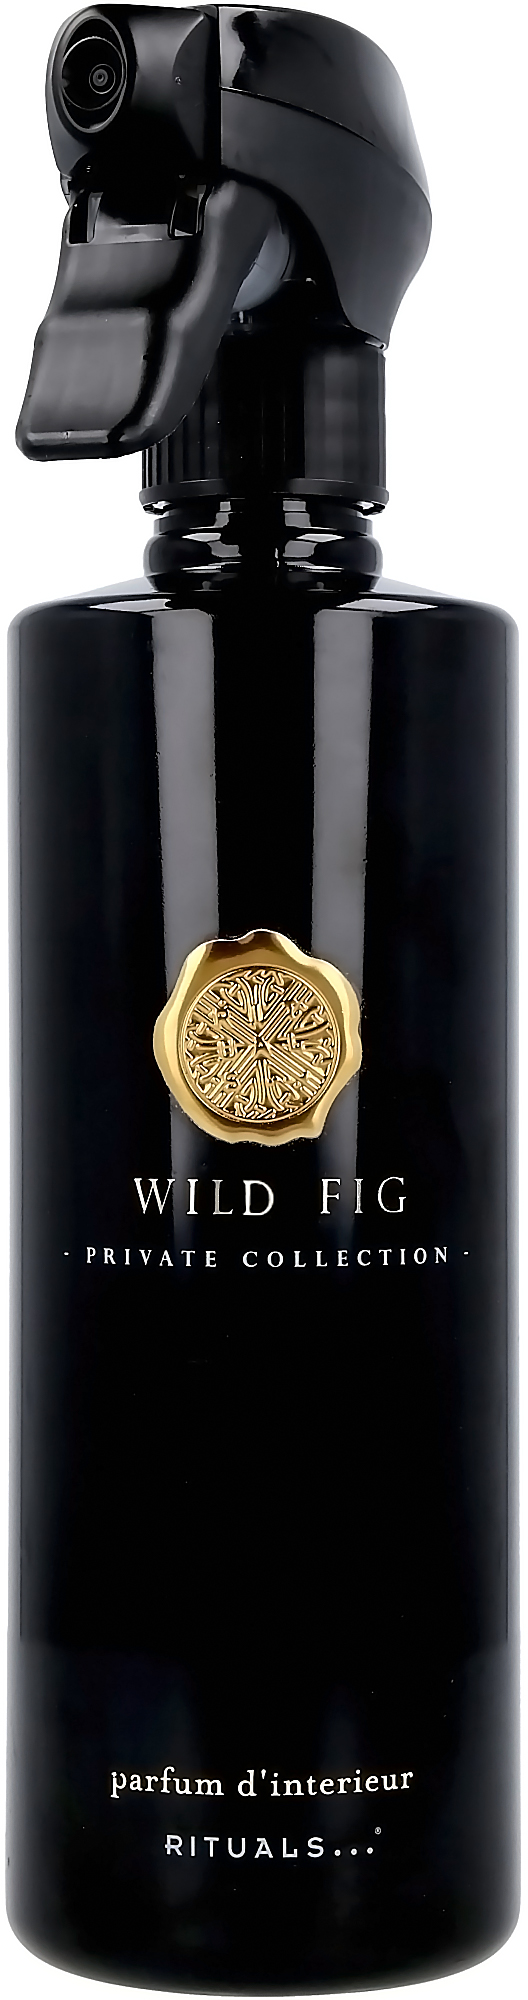 Rituals Wild Fig Parfum d'Interieur 500 ml